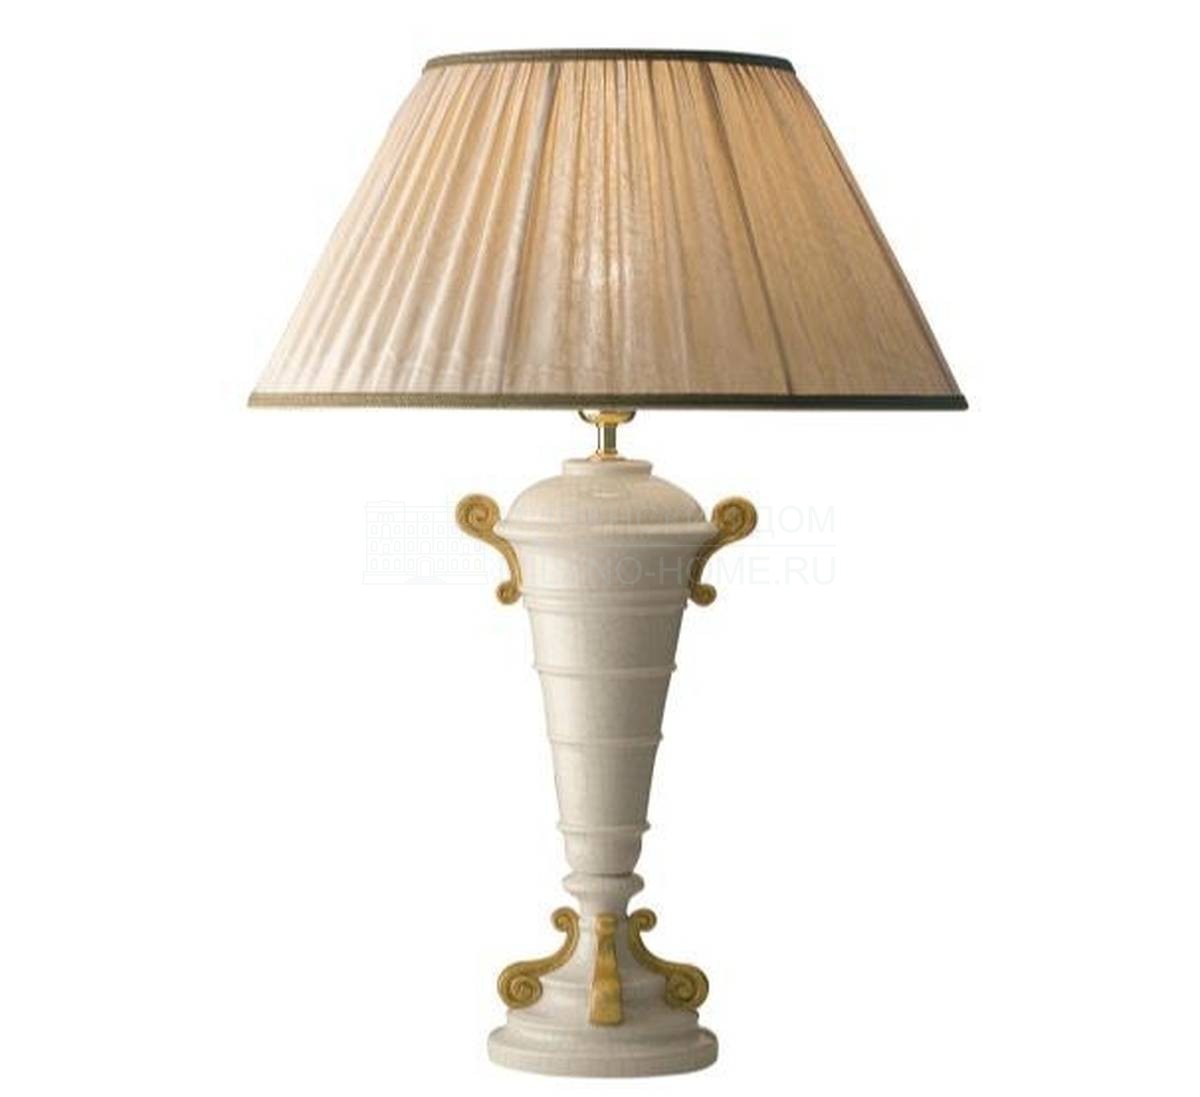 Настольная лампа Flame table lamp из Италии фабрики MARIONI